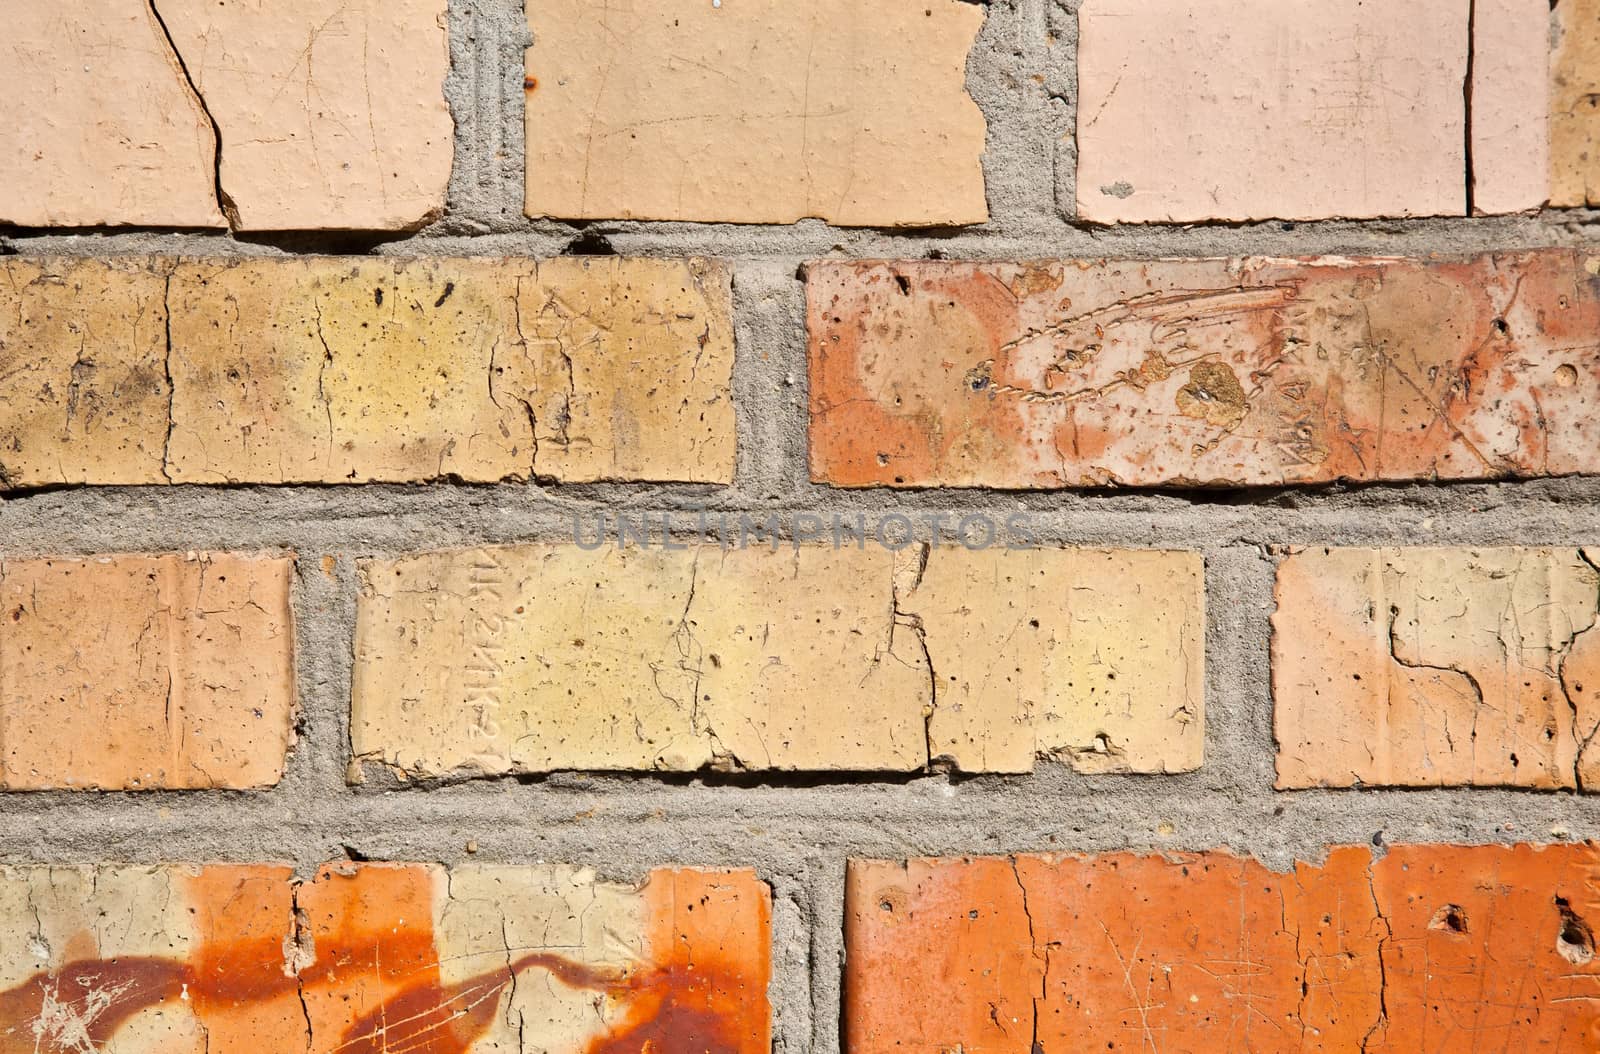 Orange and yellow brick wall texture background